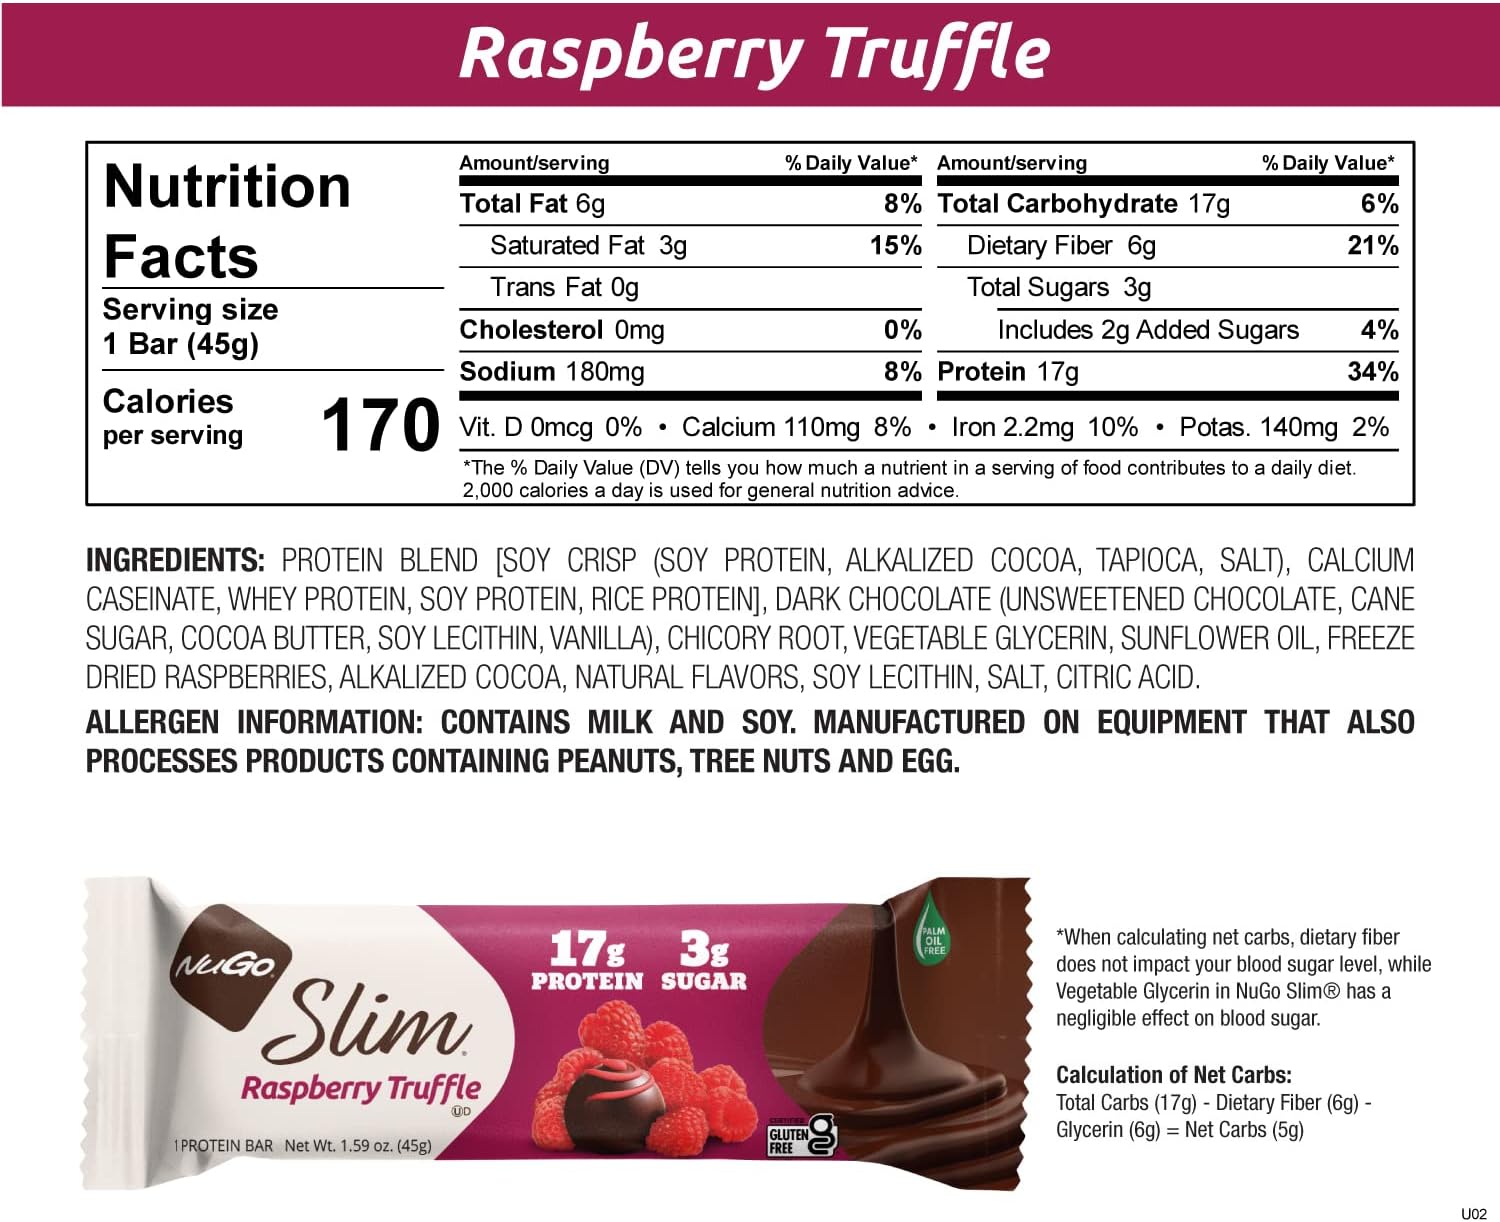 NuGo Slim Dark Chocolate Raspberry Truffle, 17g Protein, 2g Sugar, 7g 